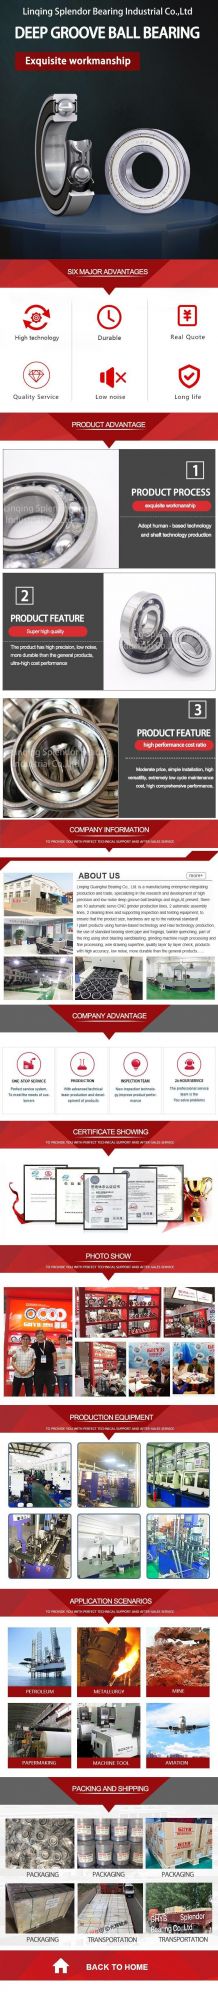 China Factory Distributor Supplier of Deep Groove Ball Bearings for Motors, Compressors, Alternators 6207-2rz/P6/Z2V2